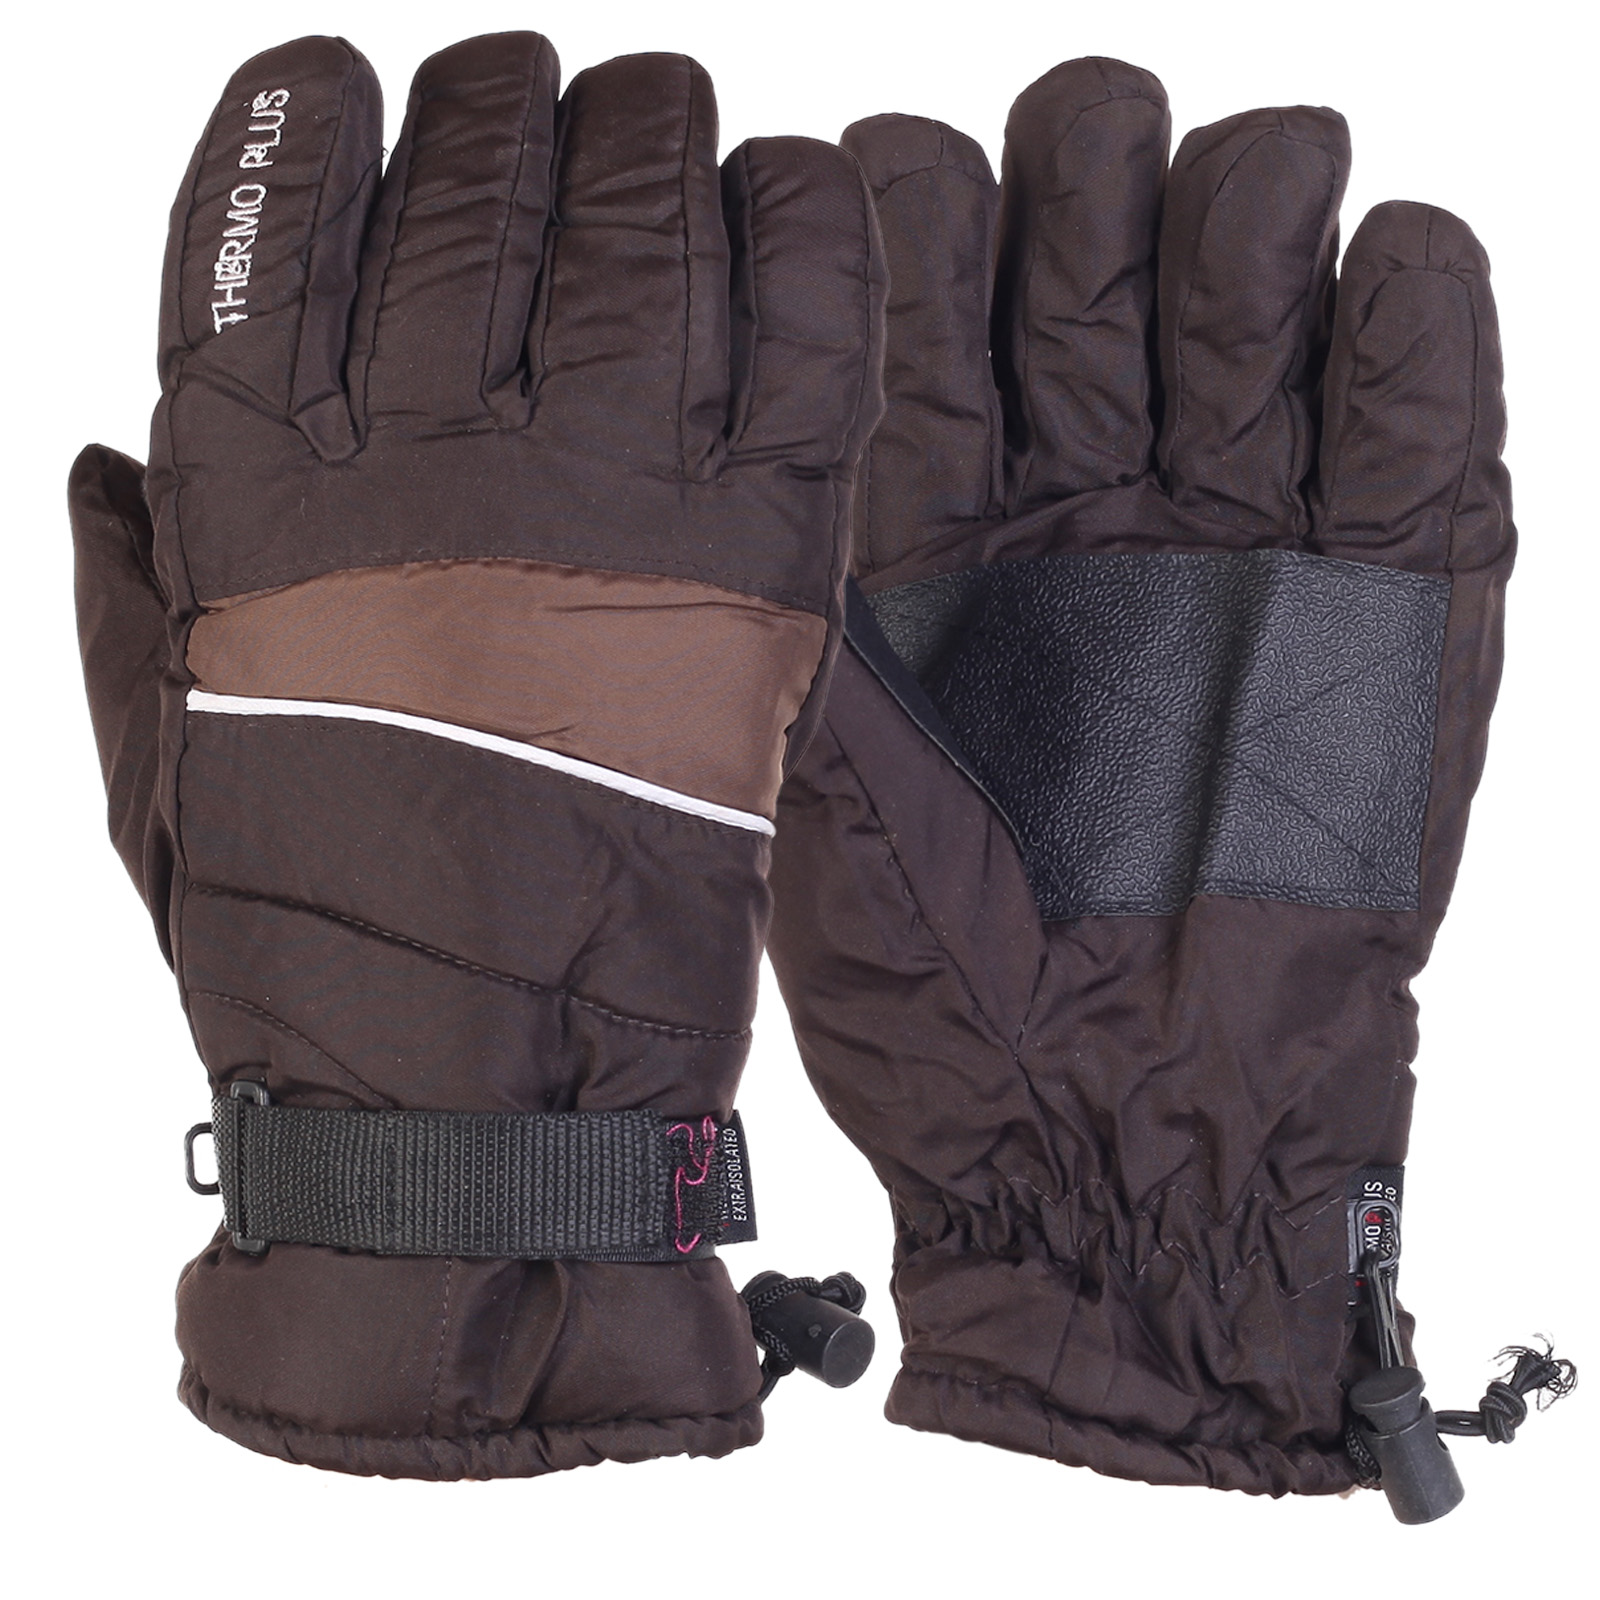 Купить дутые теплые перчатки Thermo Plus